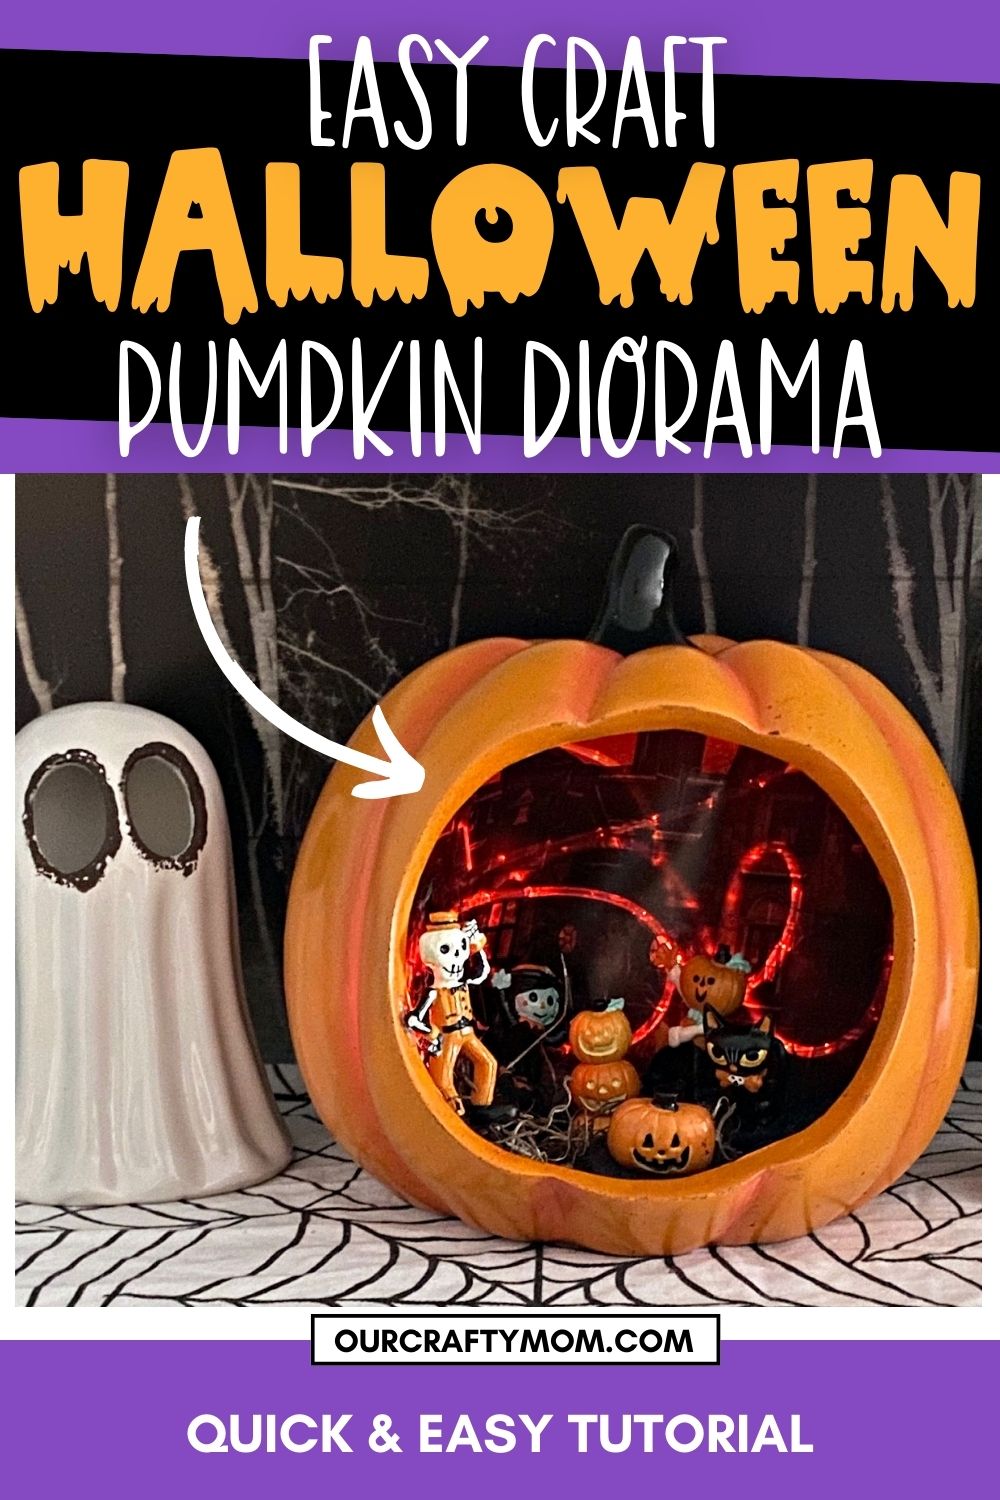 pumpkin diorama on shelf pin image with text